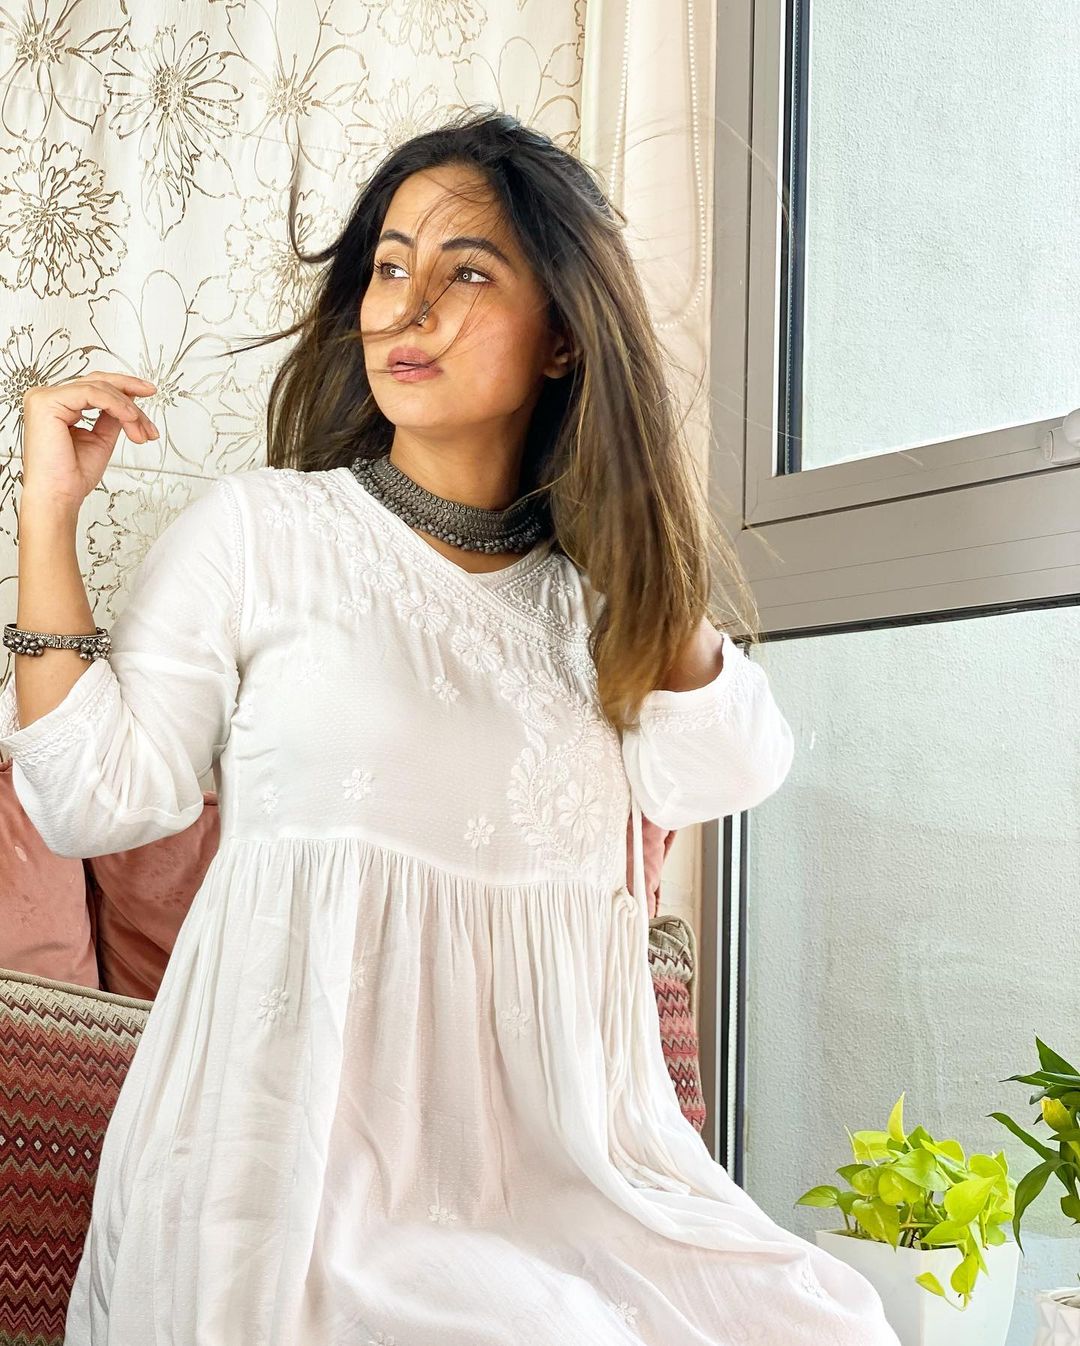 Hina Khan looks elegant in the white cotton kurta. 